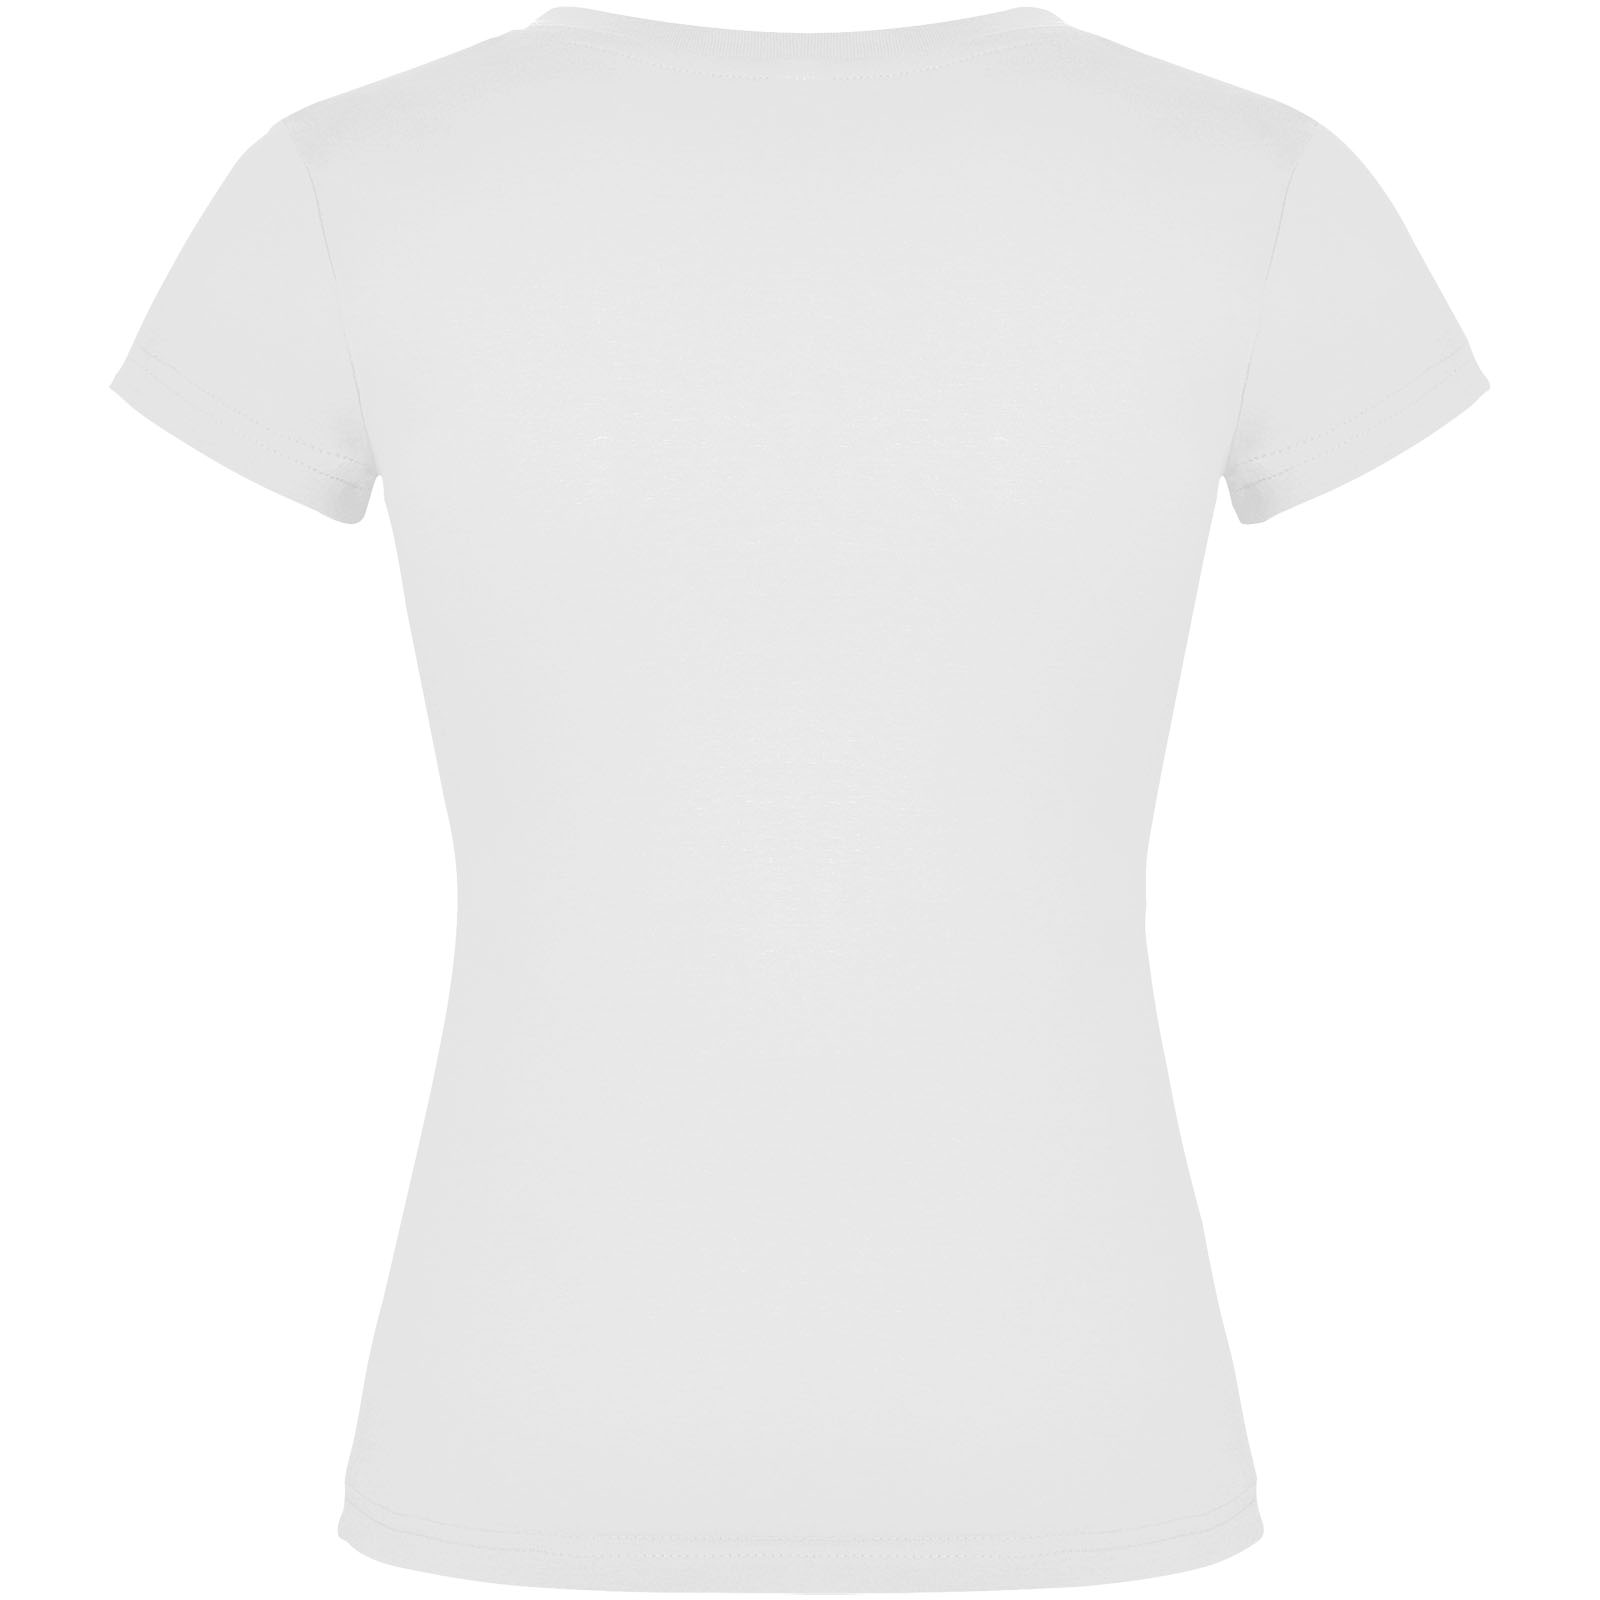 Advertising T-shirts - Victoria short sleeve women's v-neck t-shirt - 1